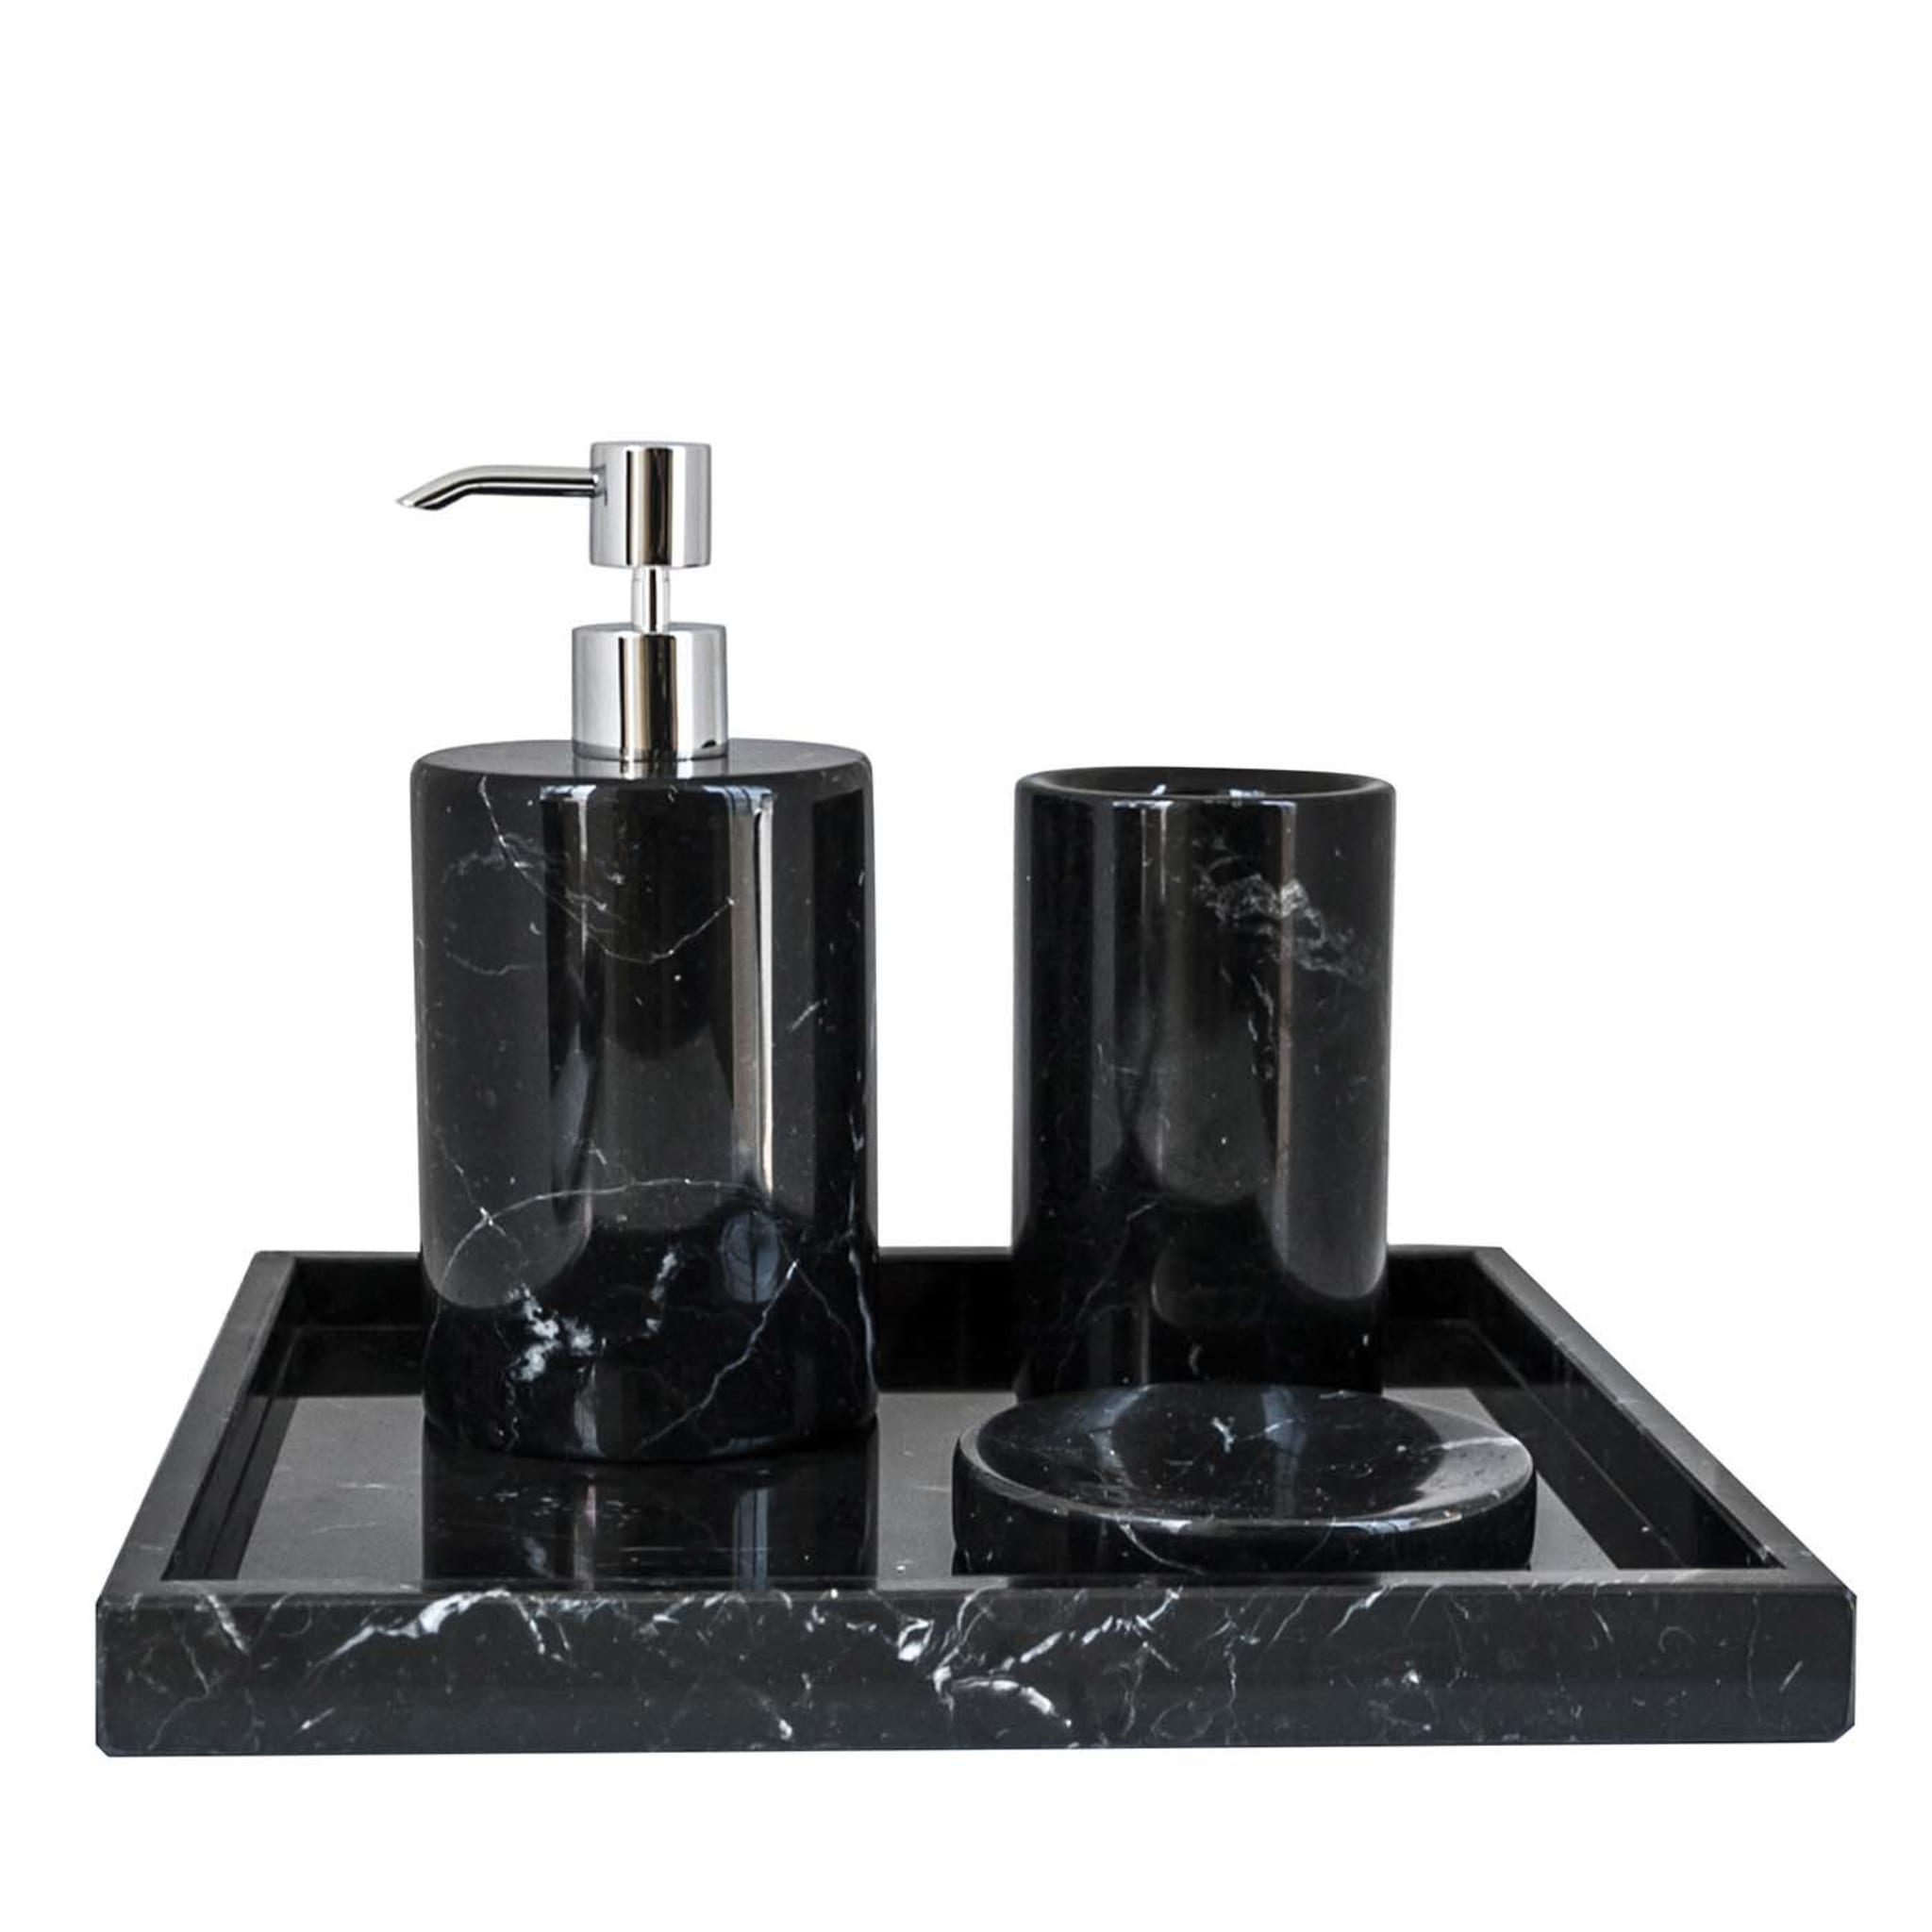 Handy Housewares Clear Plastic Wall Mount Shower / Bath Soap Bar